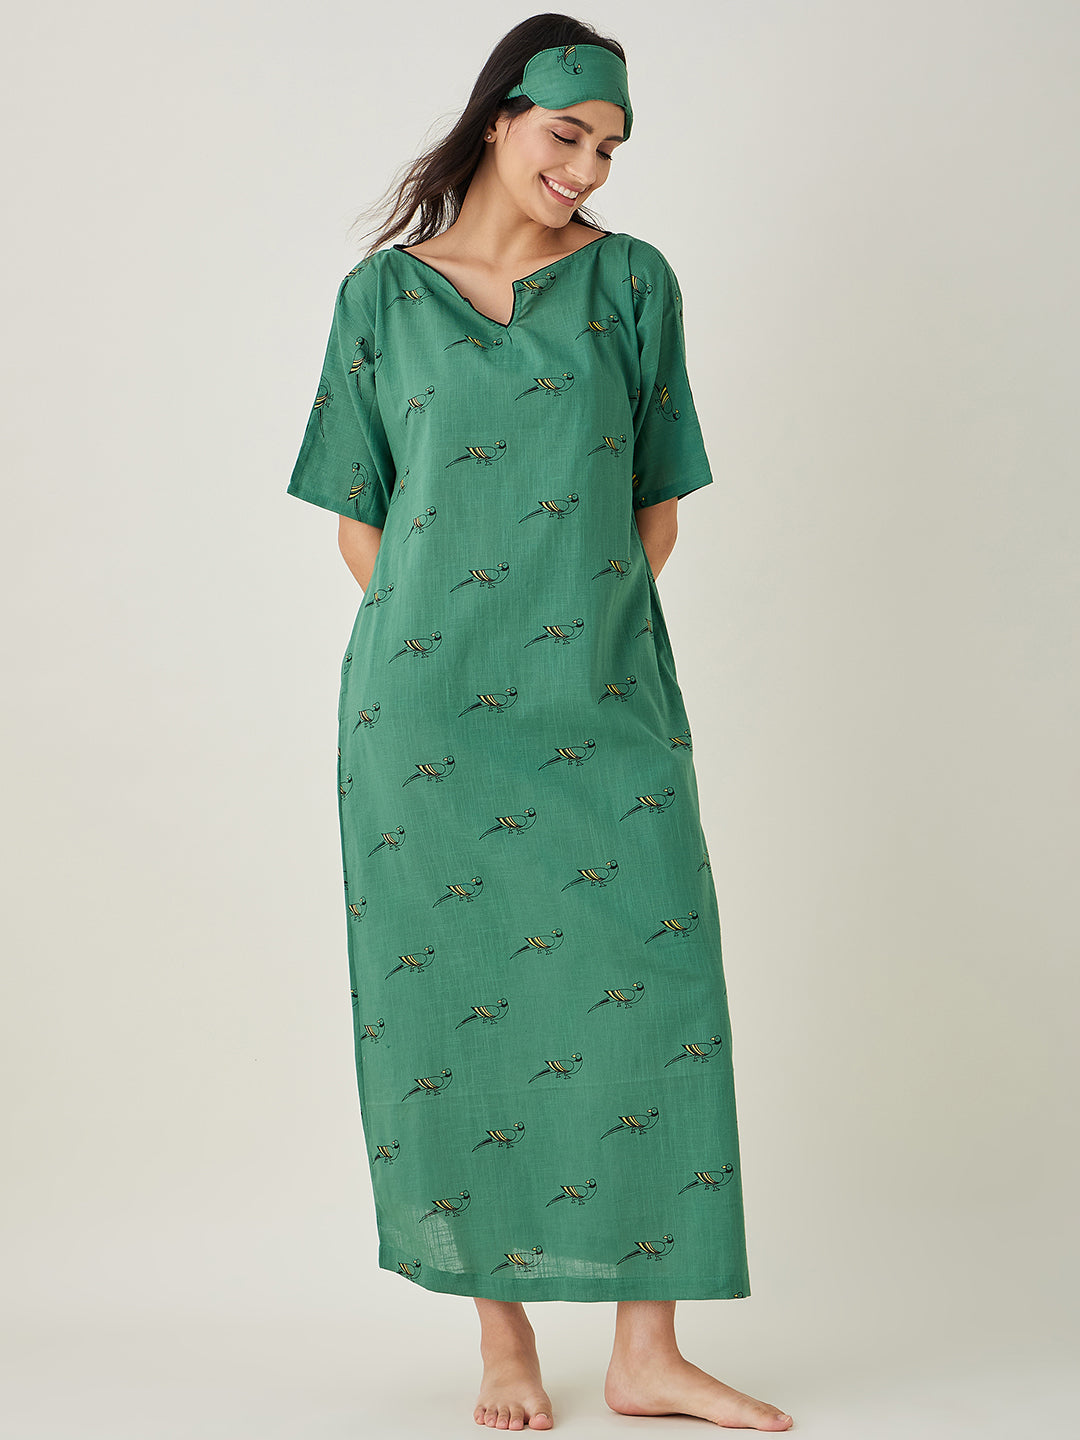 Women's Green Parrot's Perch Nightdress - The Kaftan Company